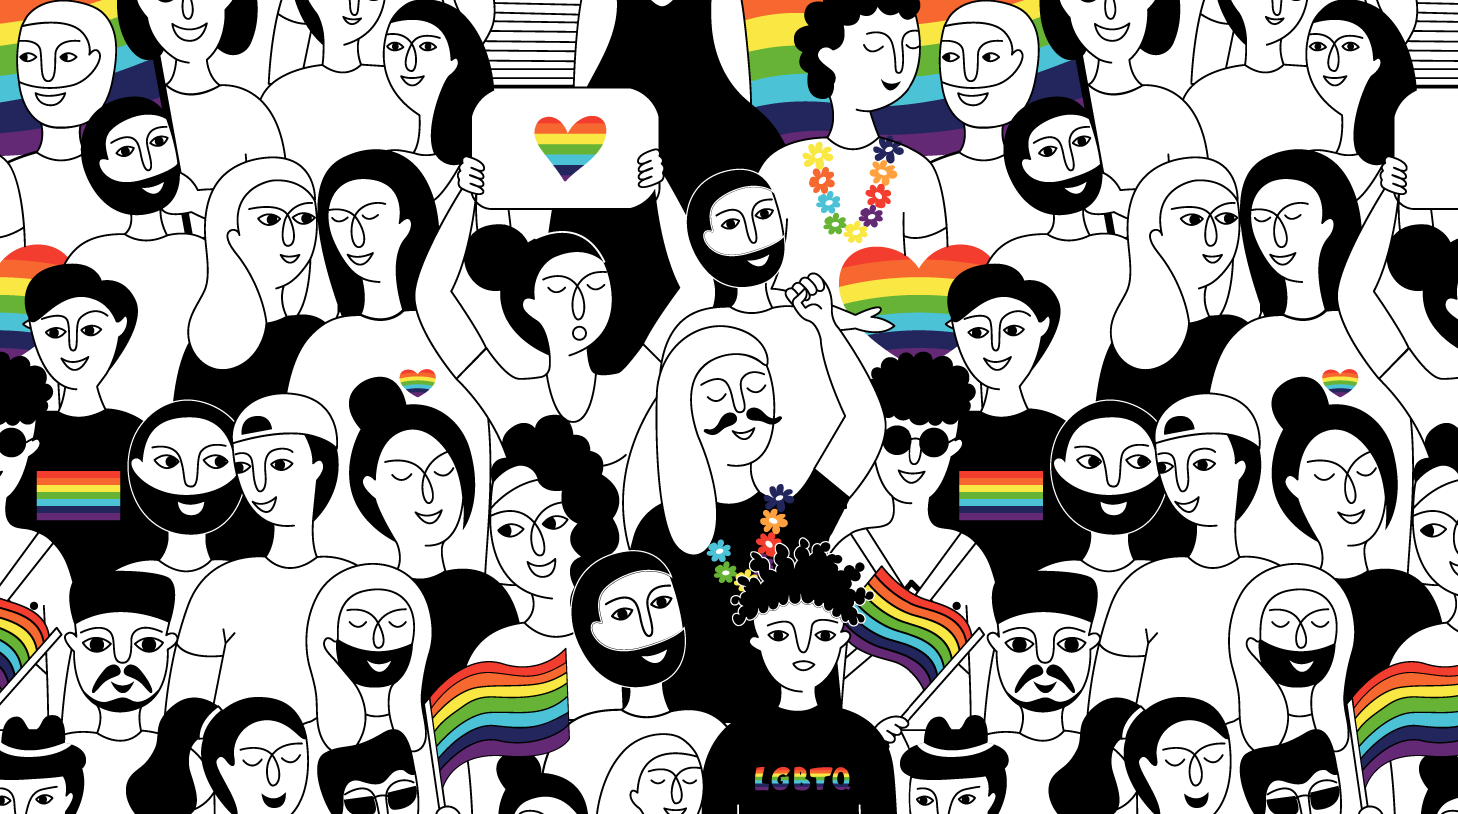 making workplaces LGBTQ inclusive